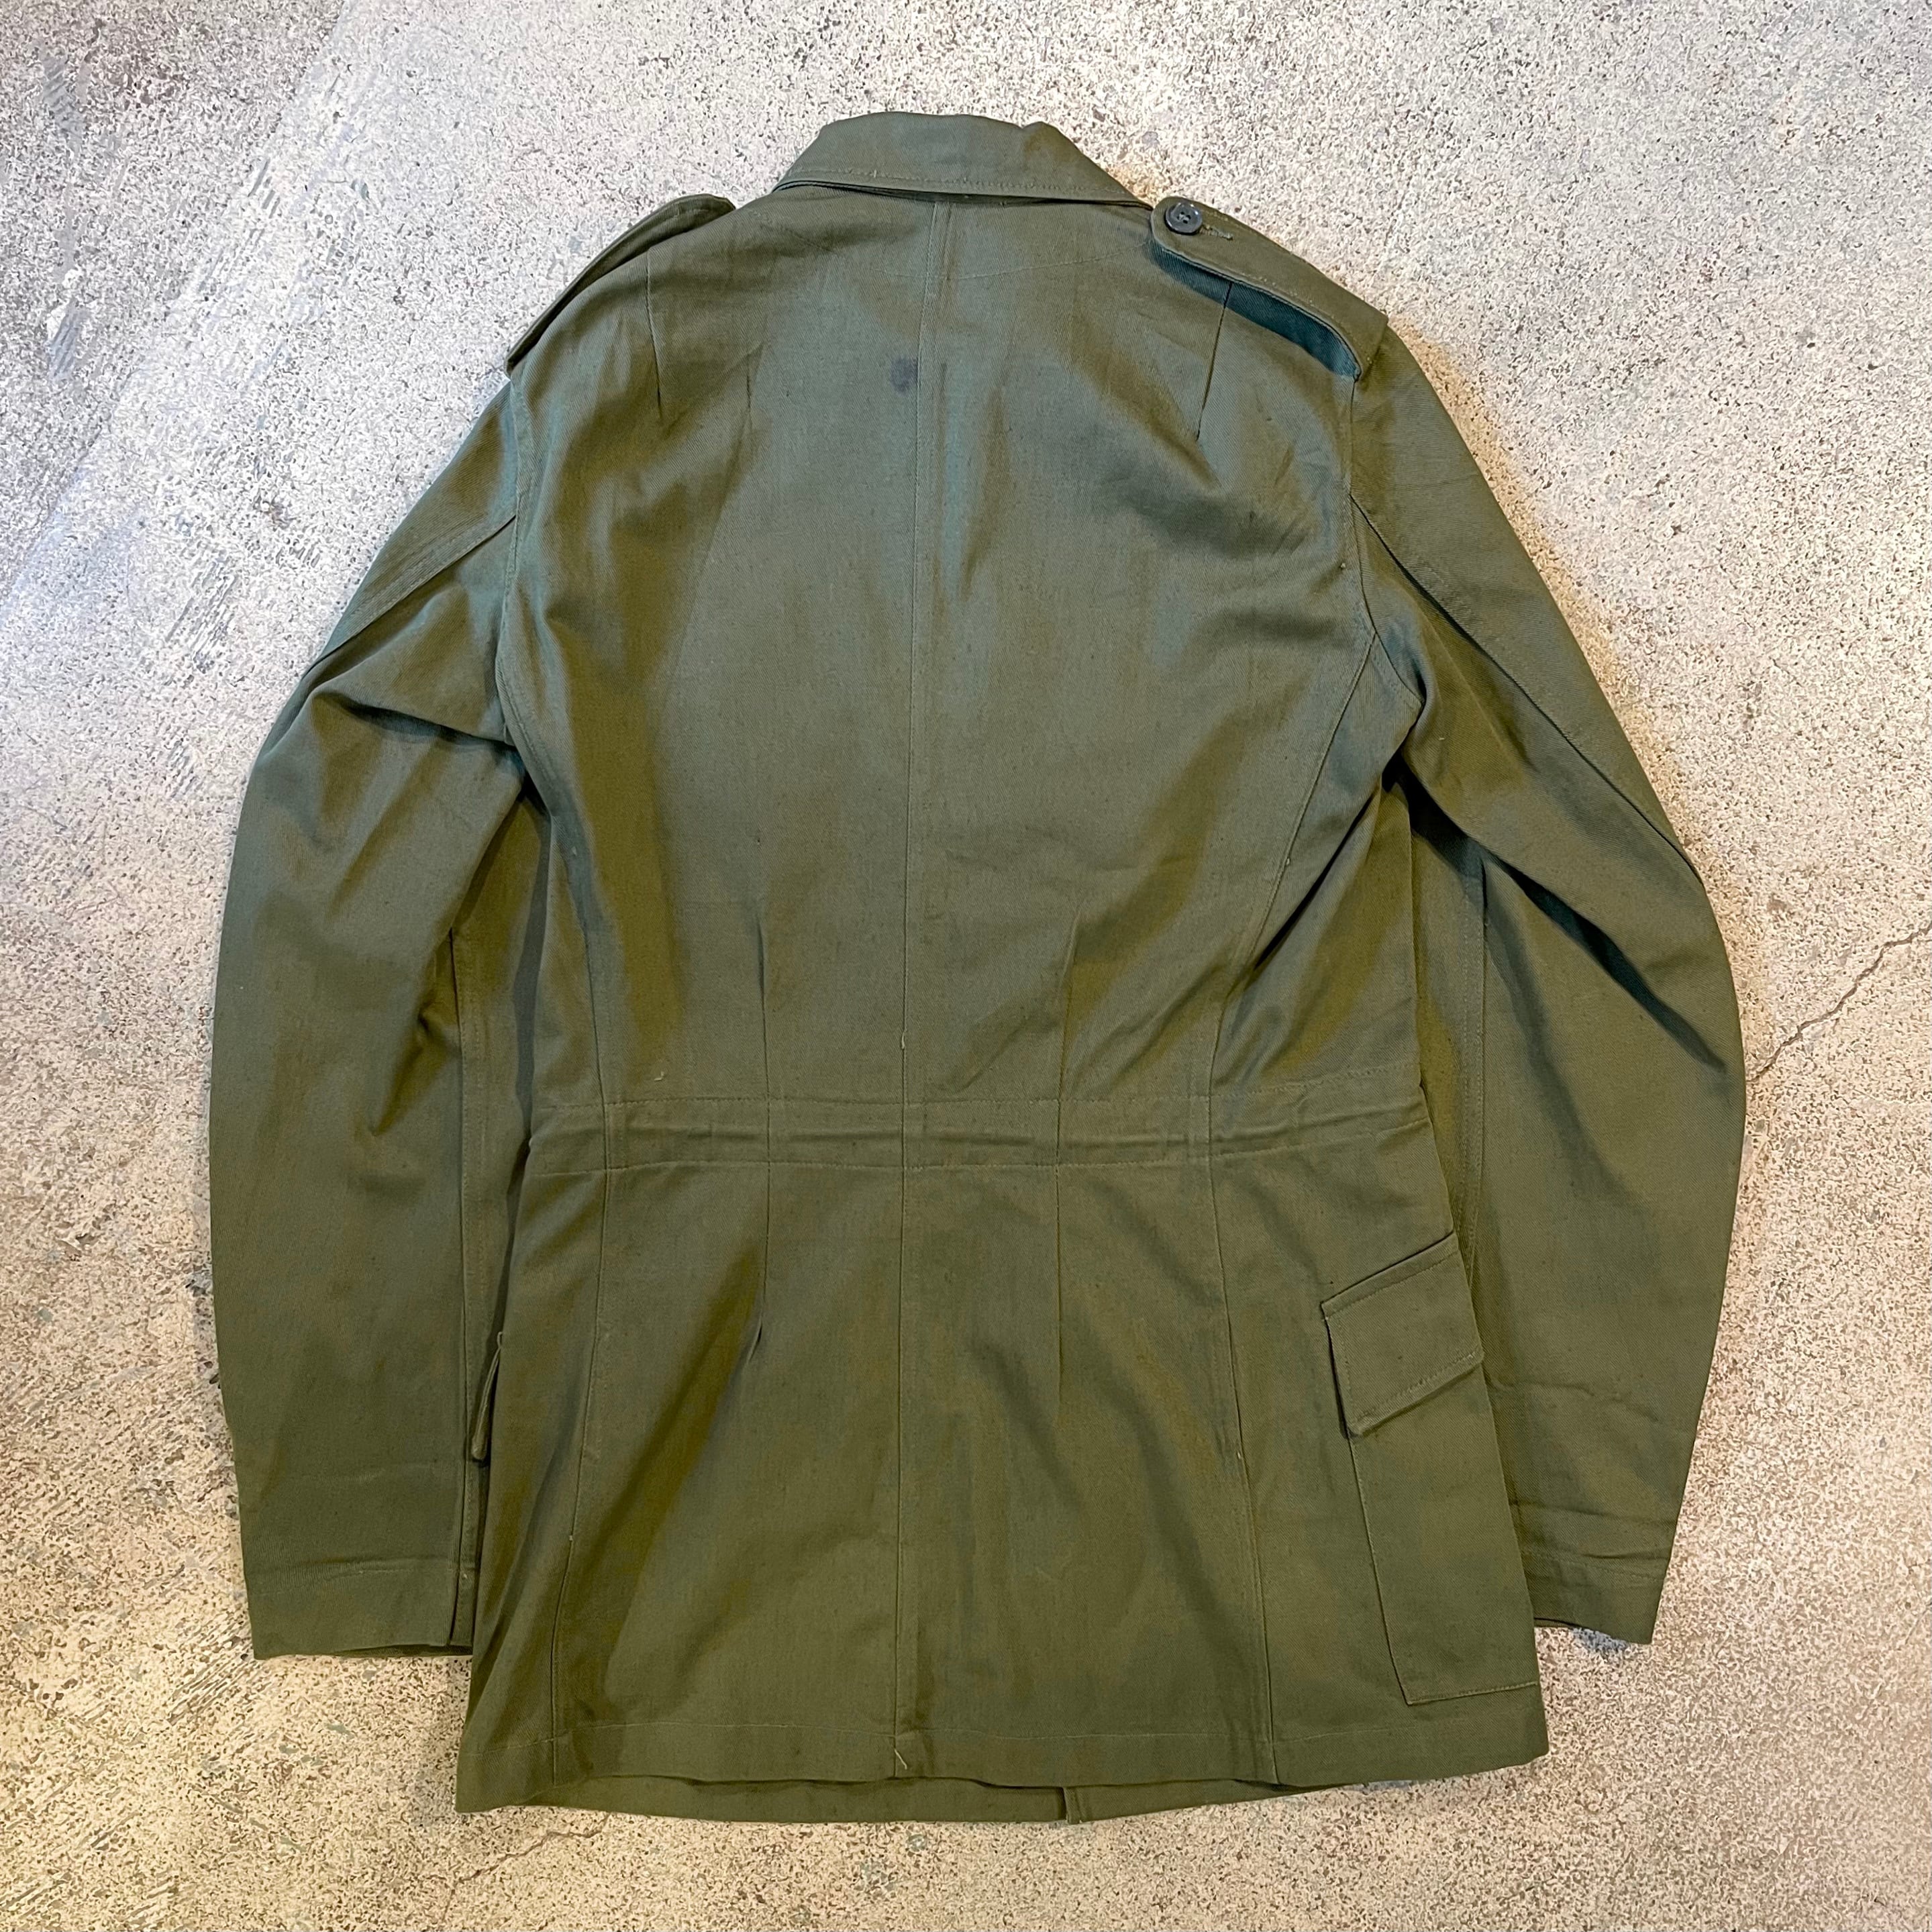 60's British Army overall green jacket イギリス軍 オーバーオールジャケット